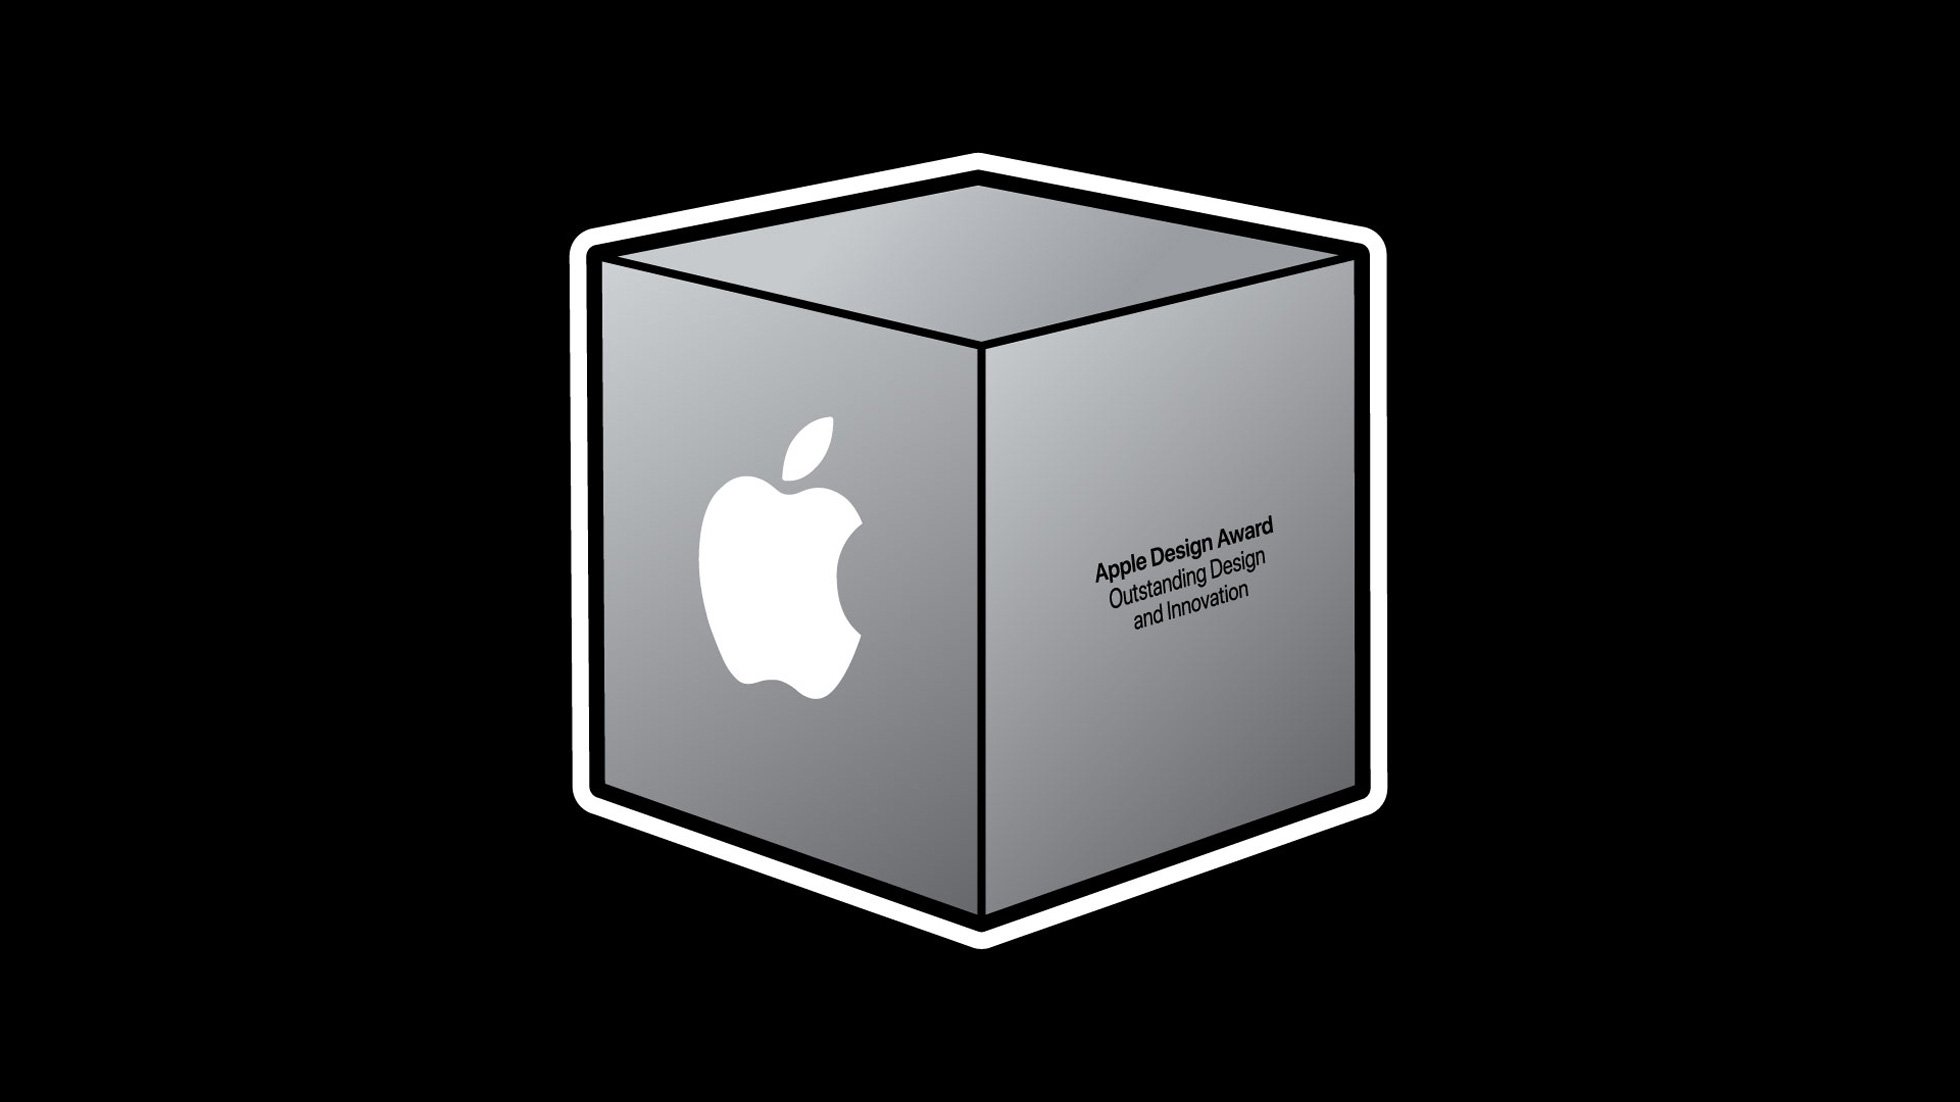 Apple design award graphic 06222020 big.jpg.large 2x 2